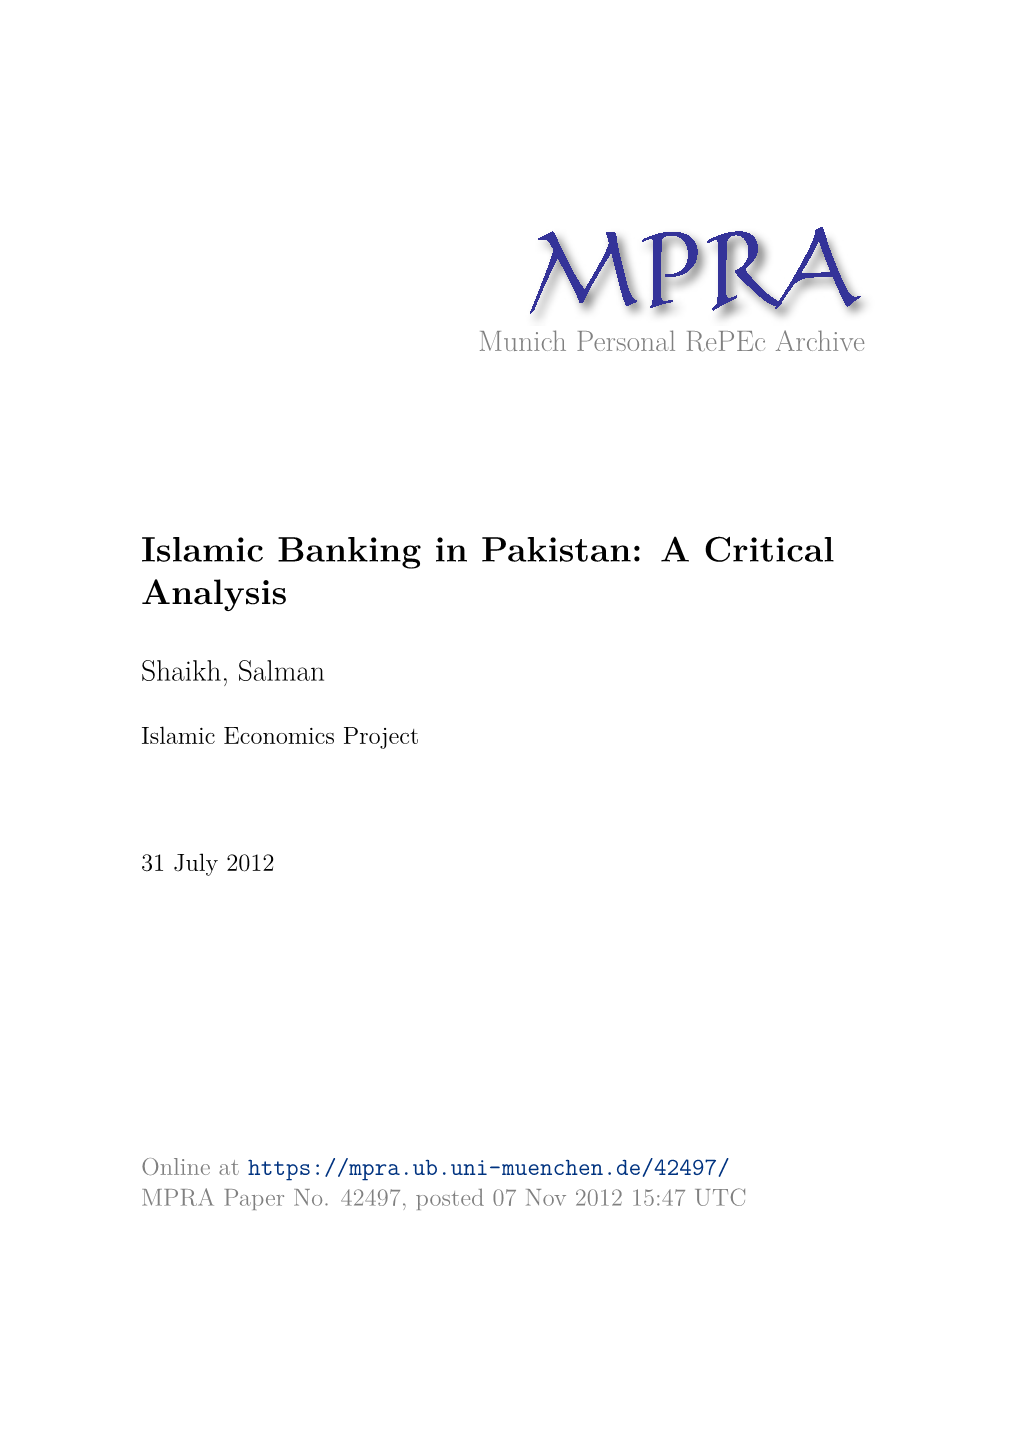 Islamic Banking in Pakistan: a Critical Analysis